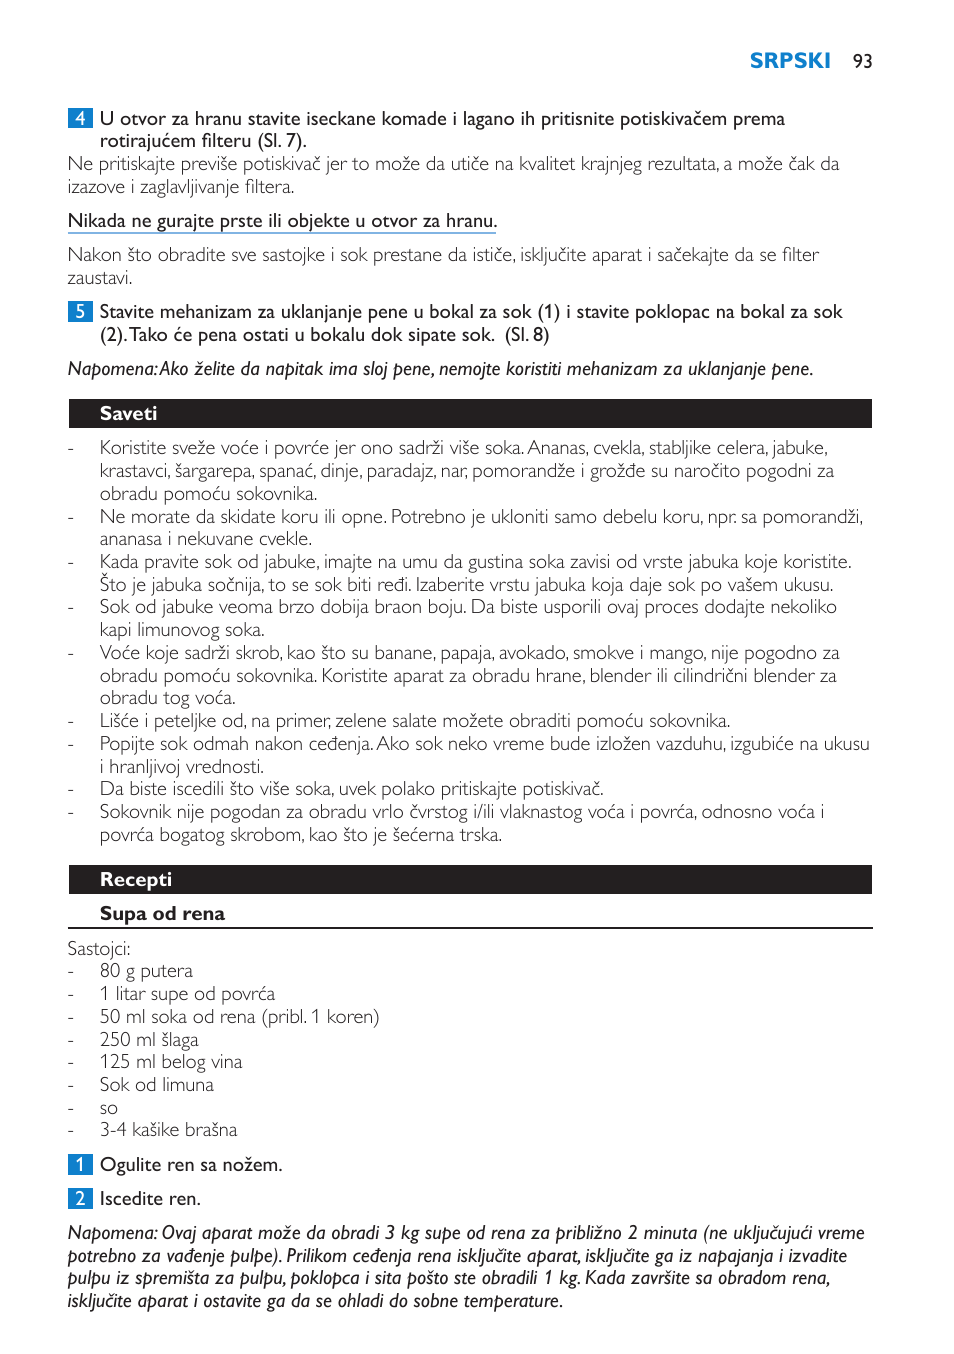 Saveti, Recepti, Supa od rena | Philips HR1858 User Manual | Page 93 / 108  | Original mode